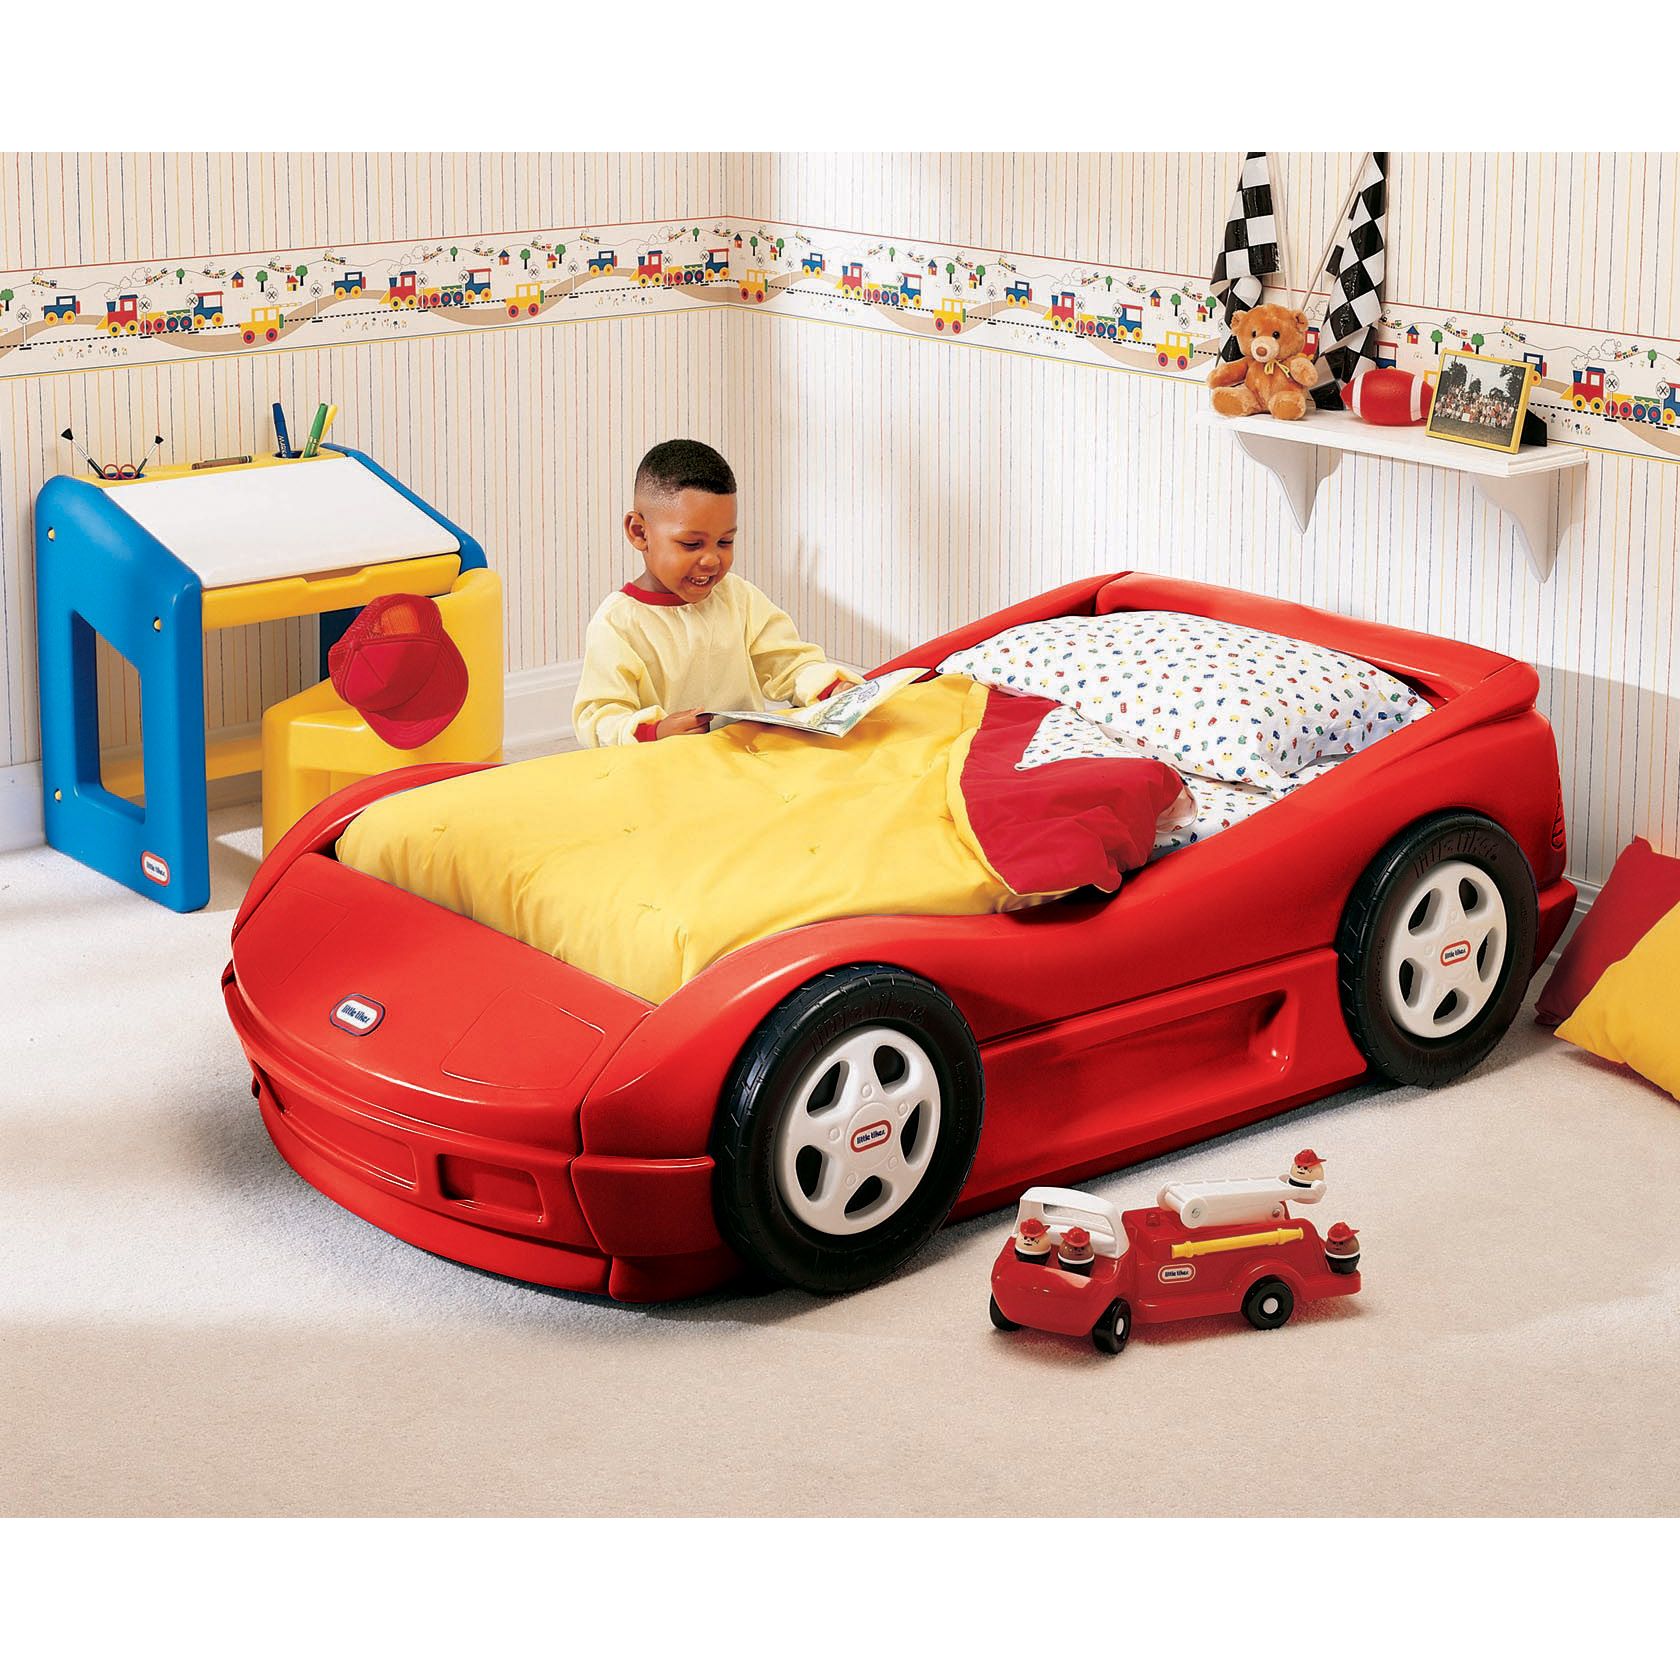 Little Tikes Roadster Toddler Bed, Red at John Lewis